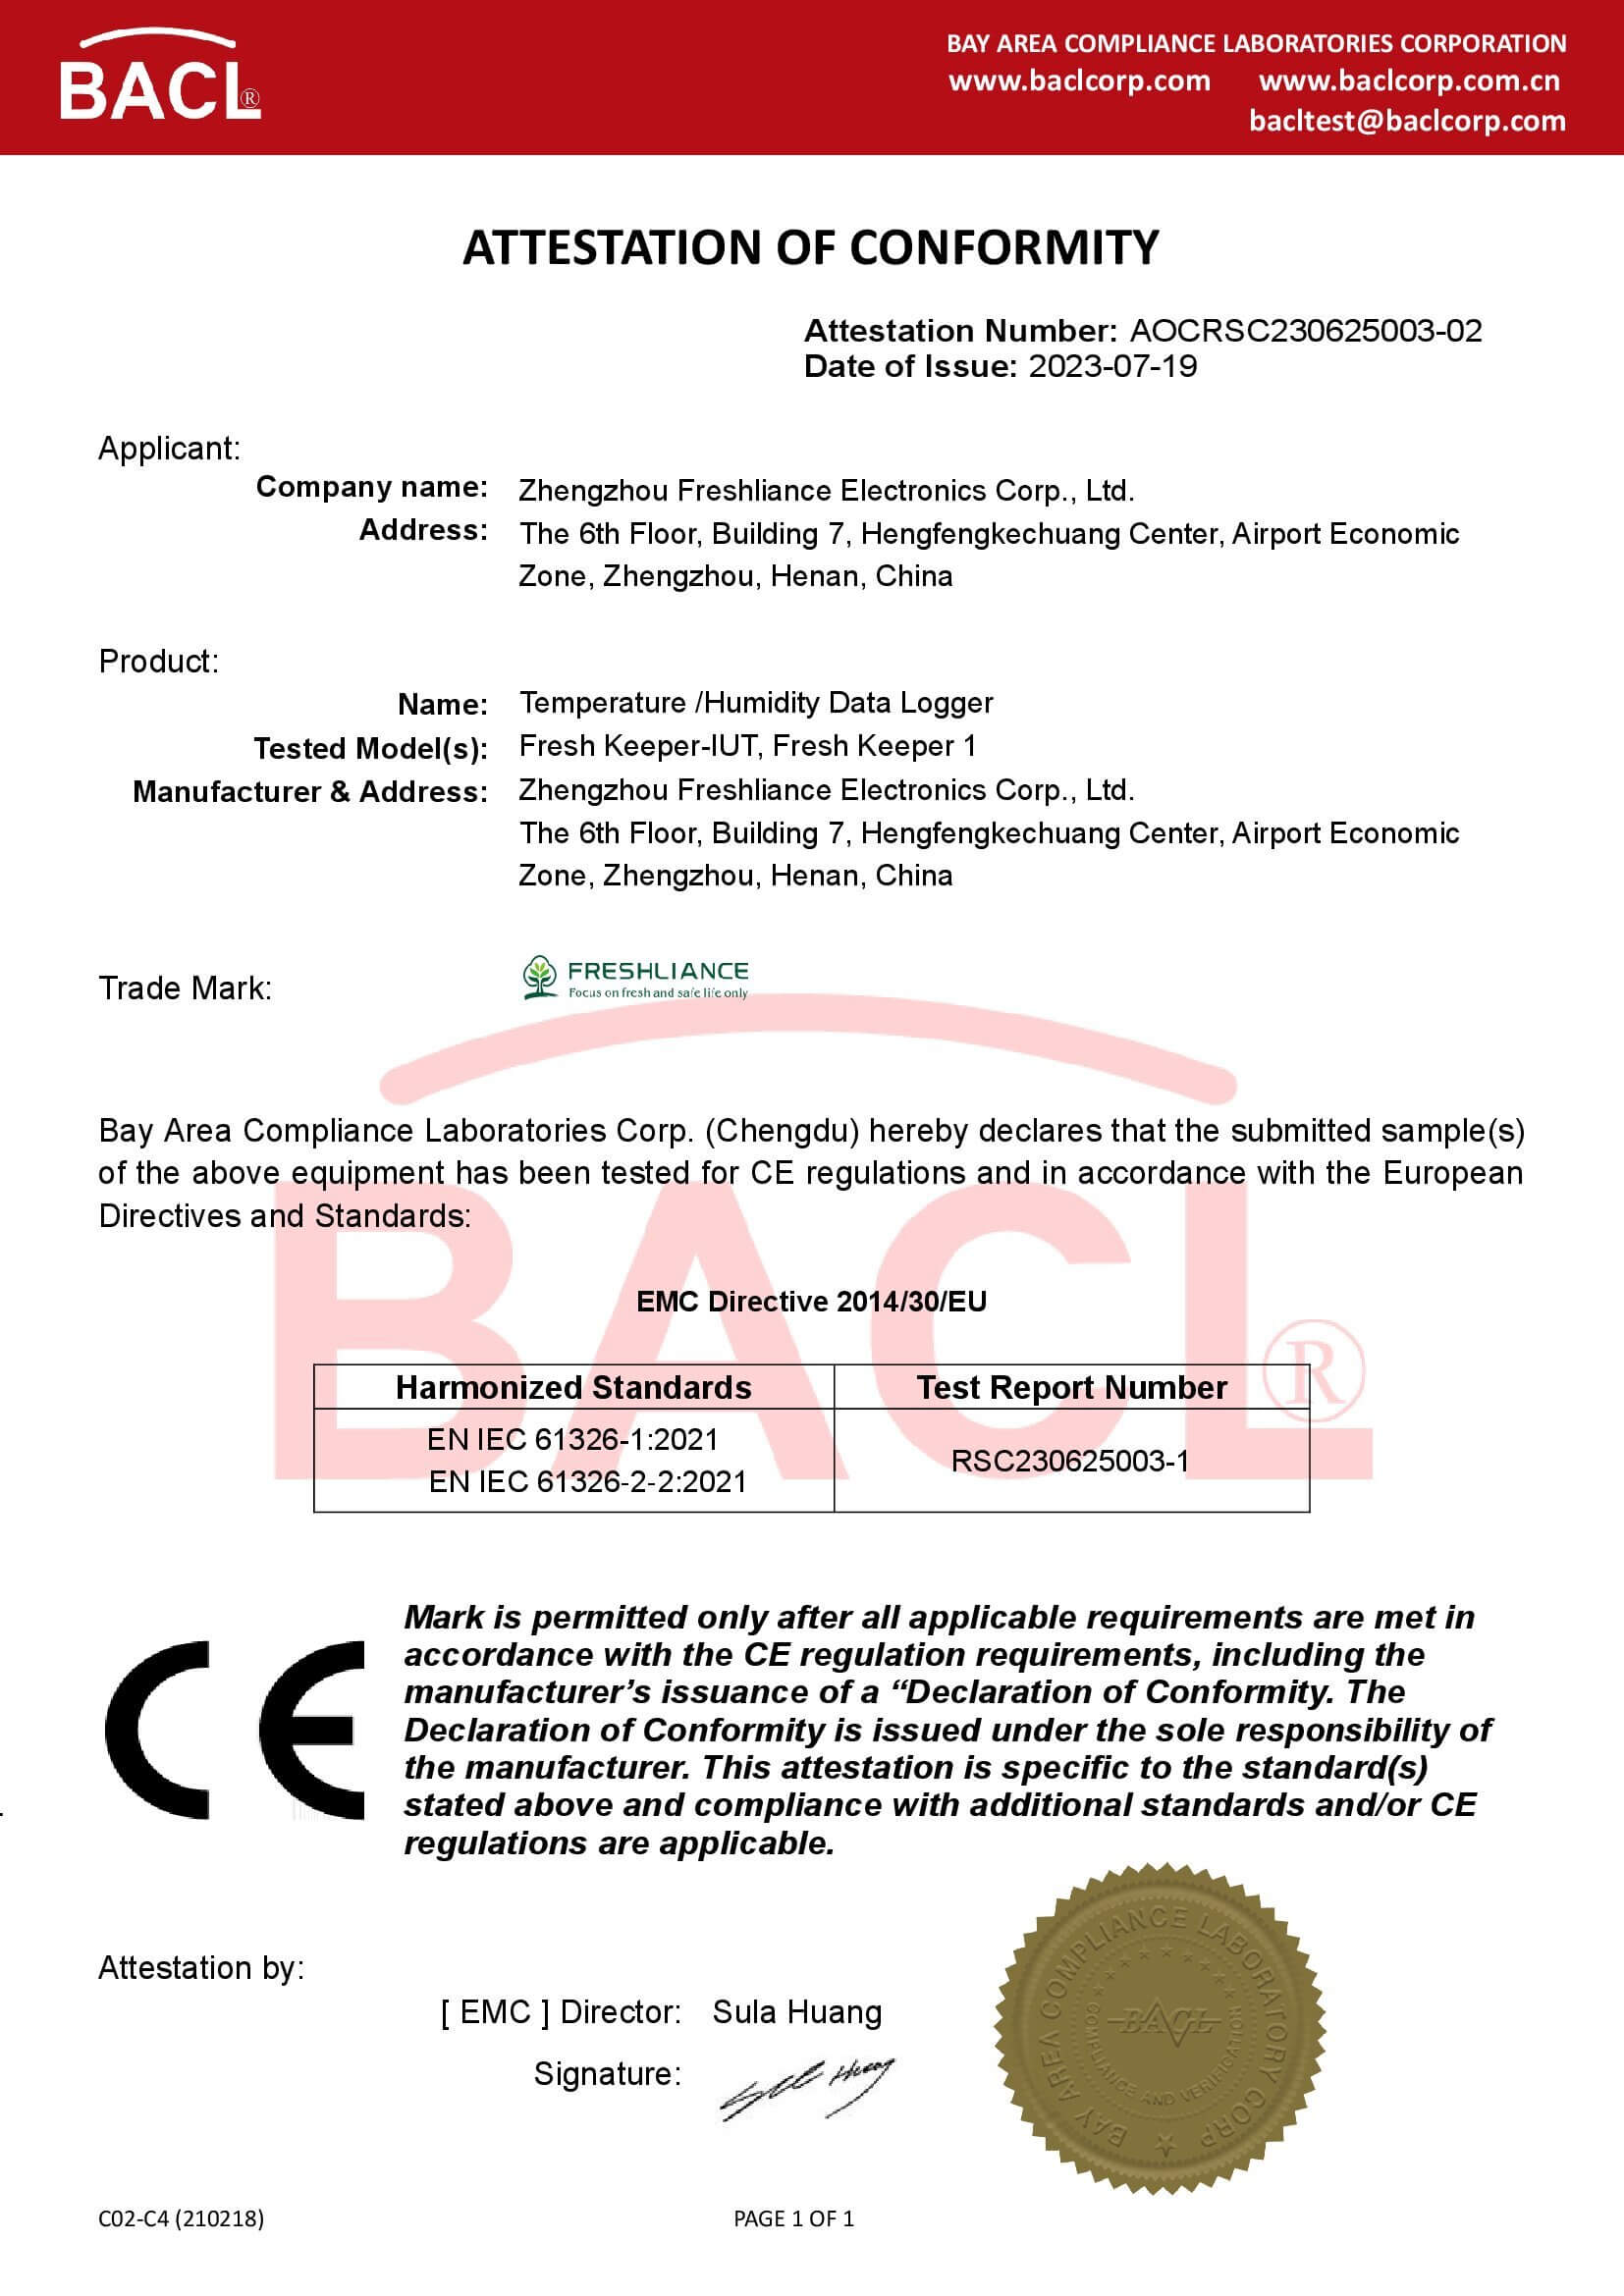 Fresh Keeper CE certificate